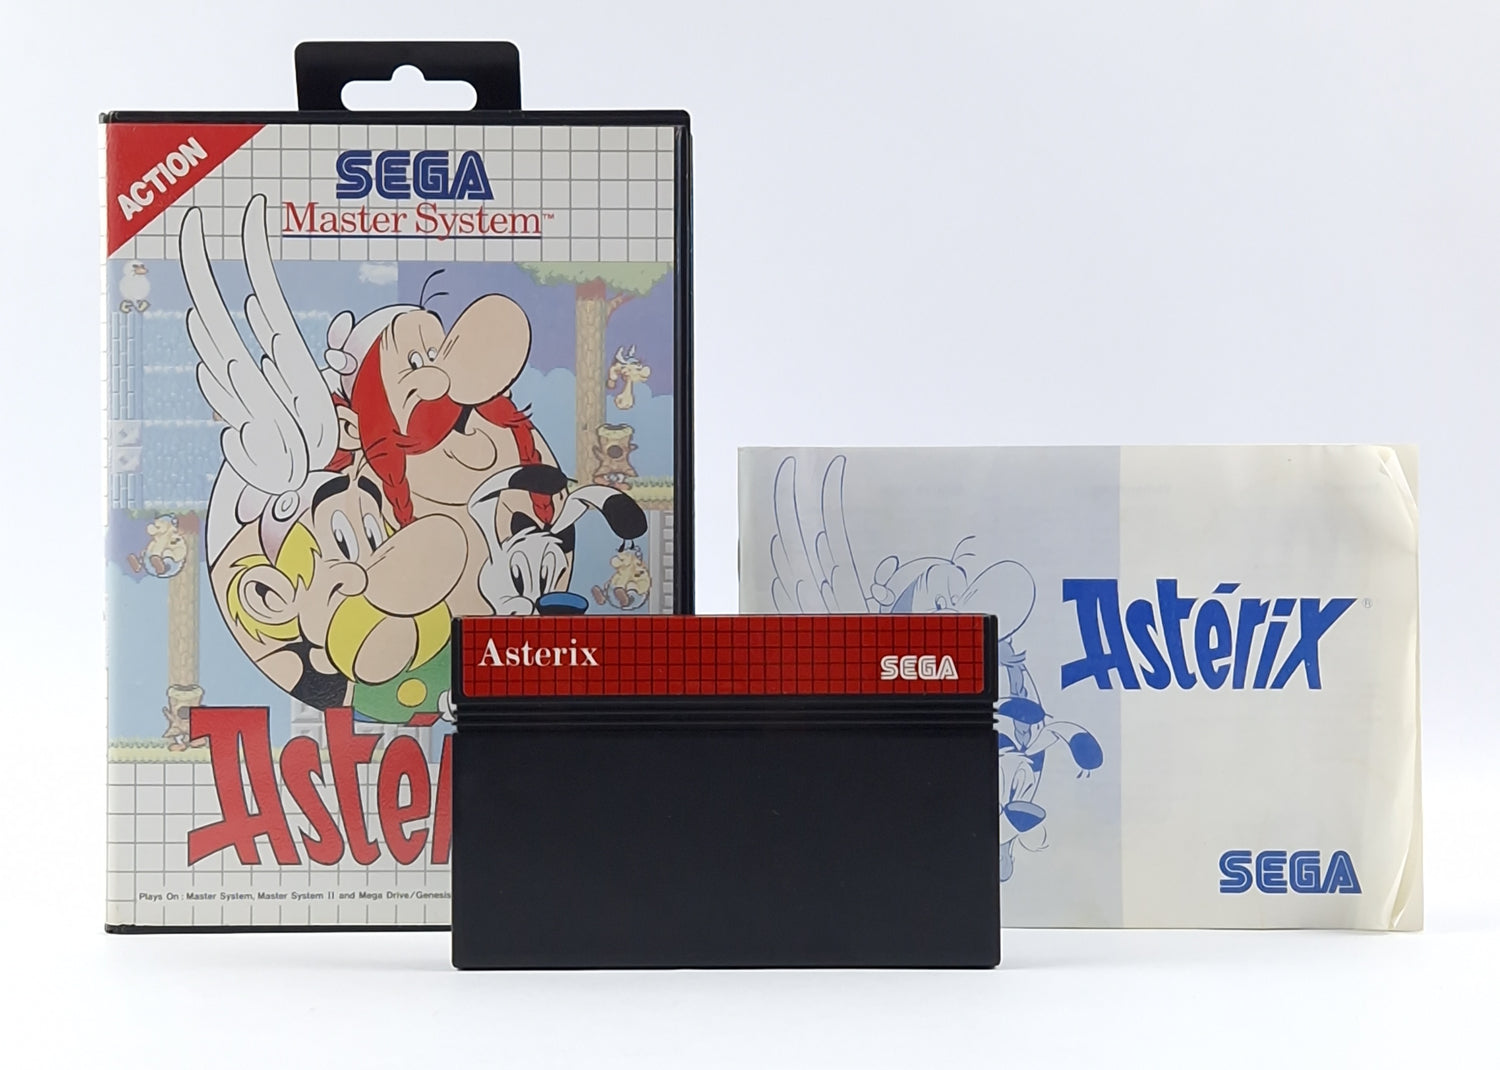 Sega Master System Game: Asterix - OVP Instructions Module - PAL Game Good